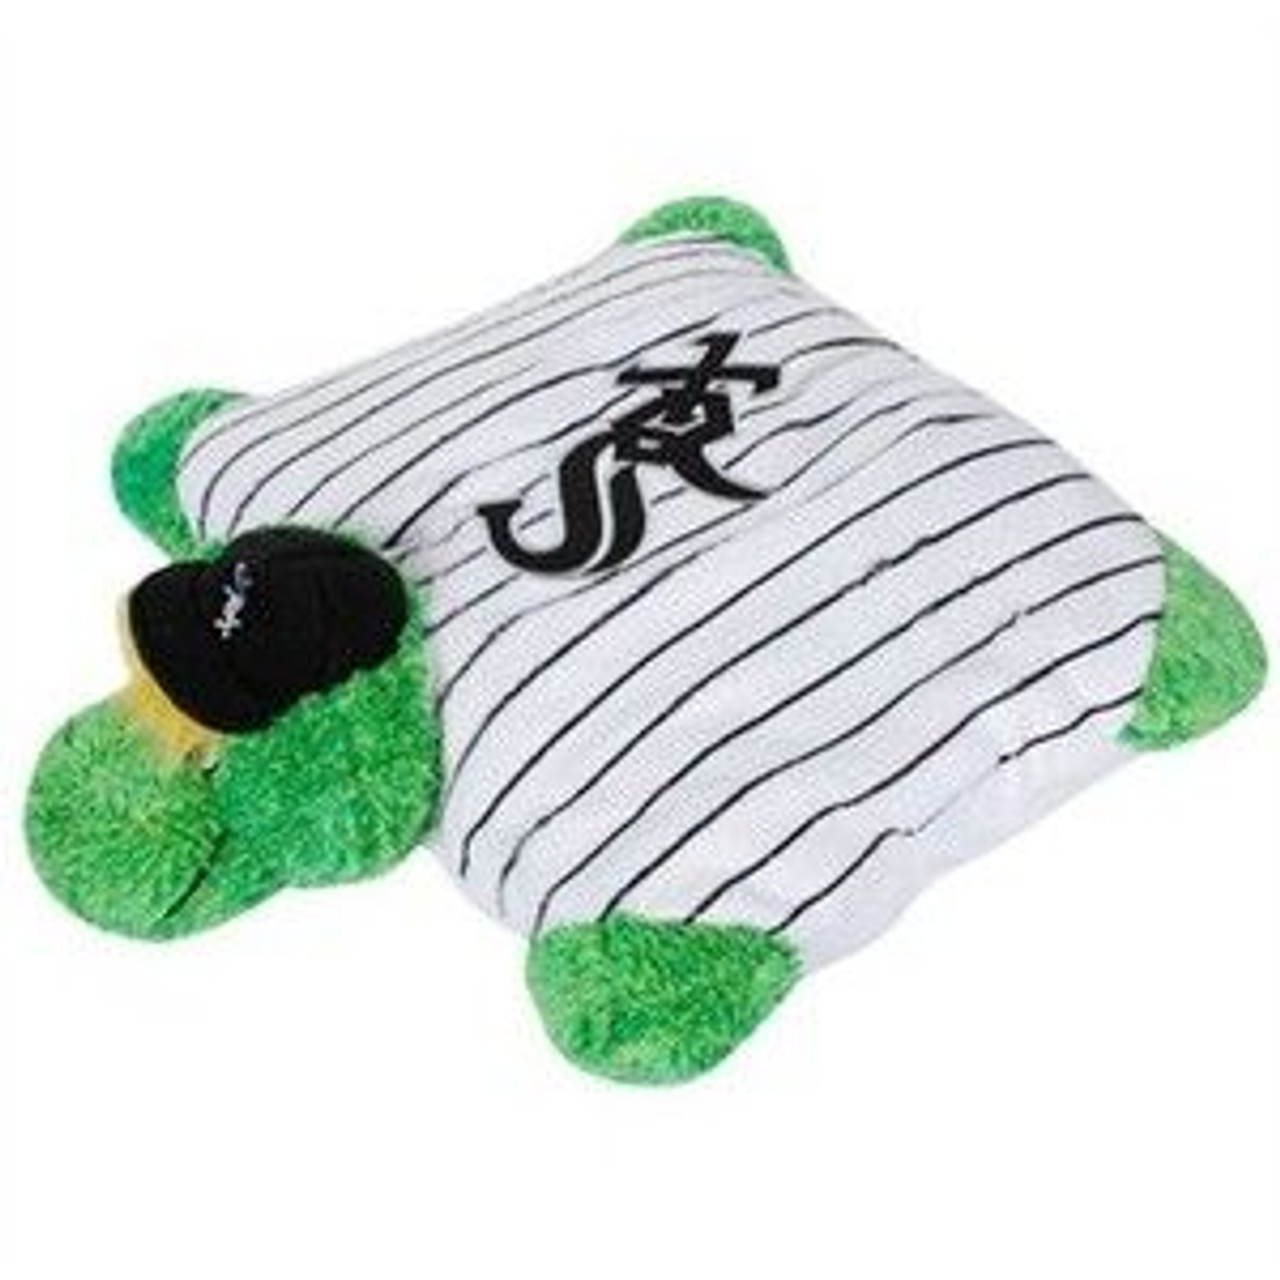 Chicago White Sox Pillow Pet